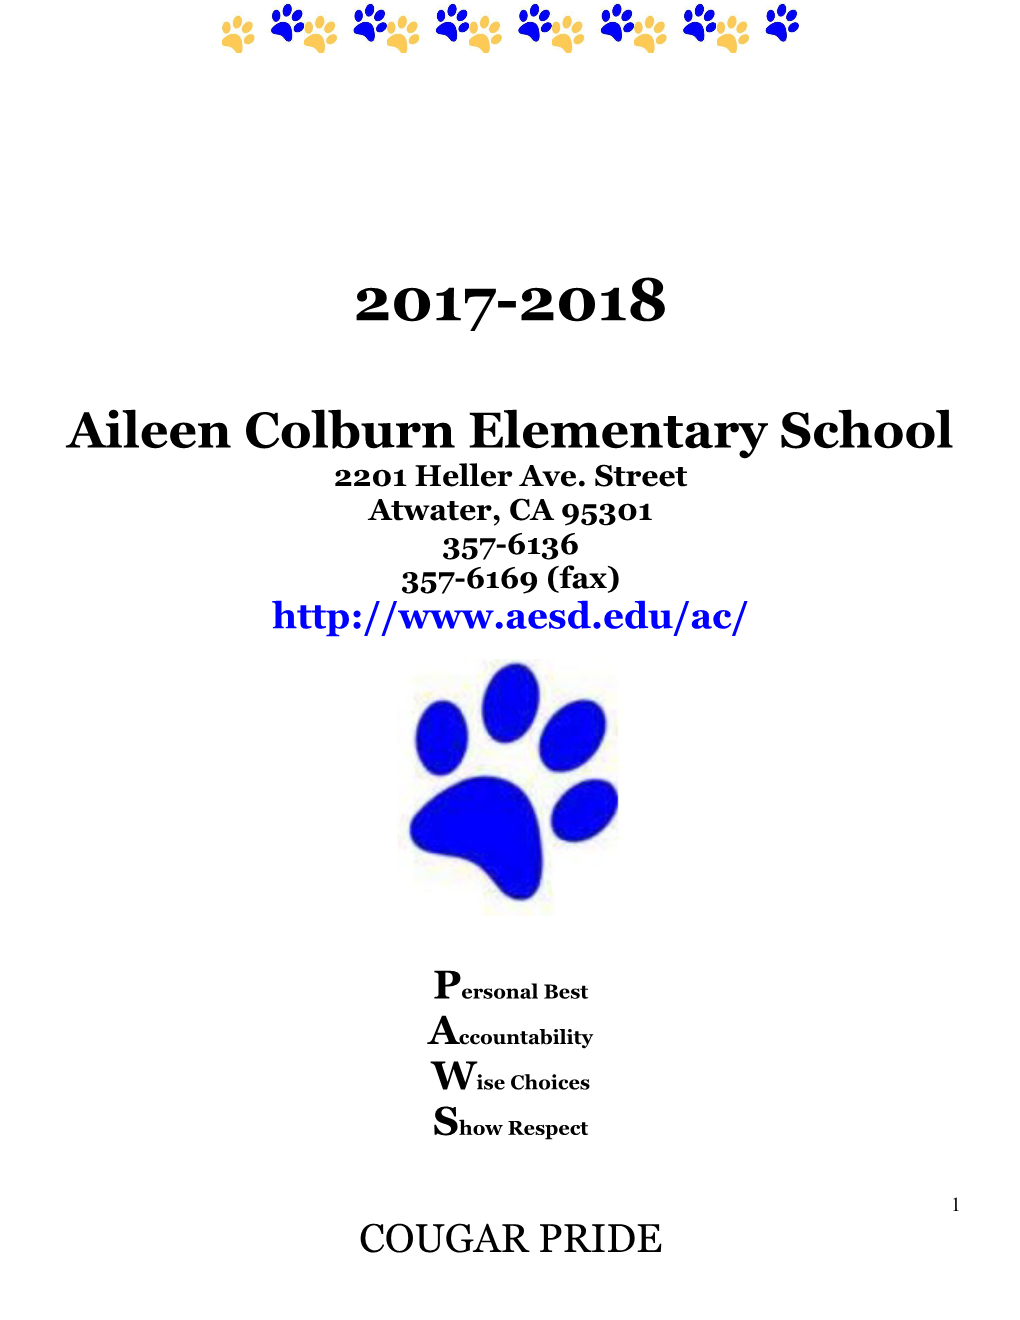 Aileen Colburn Elementary School